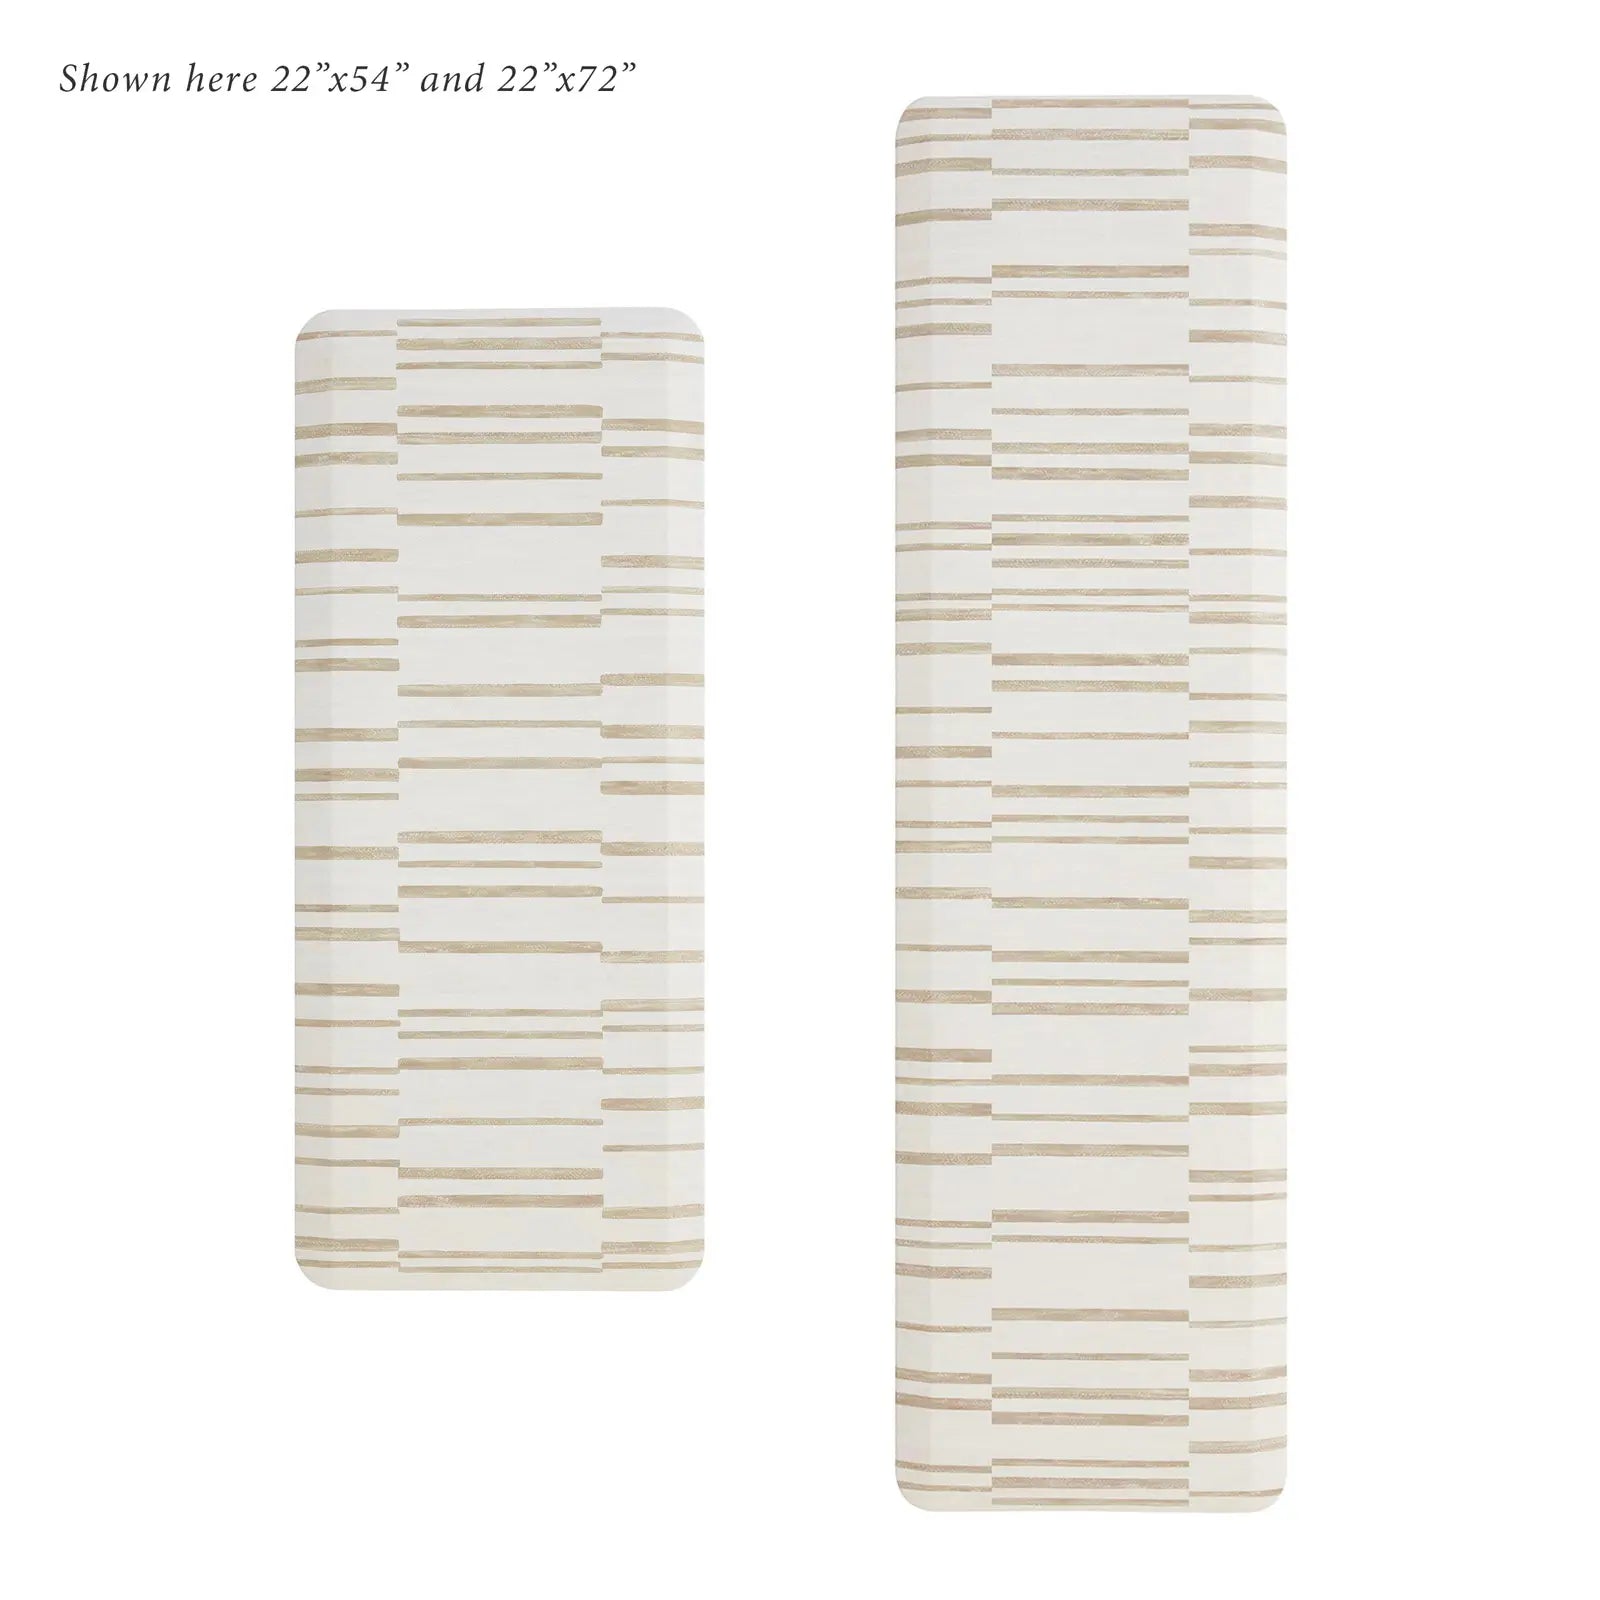 Beige inverted stripe kitchen mat shown in size 22x54 and 22x72